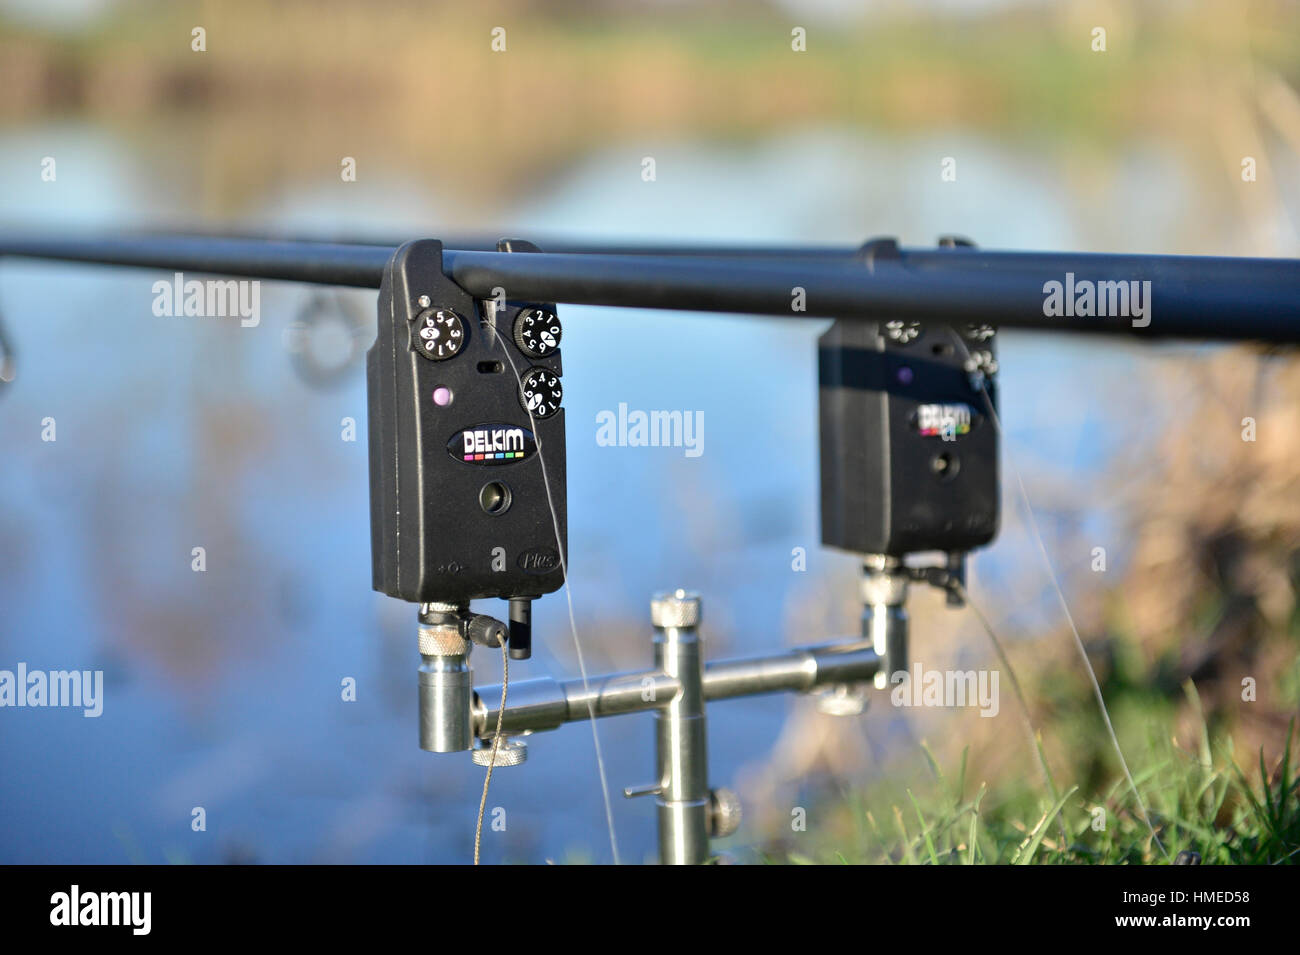 Delkim TXI Plus Electronic Bite Alarms - Fishing Stock Photo